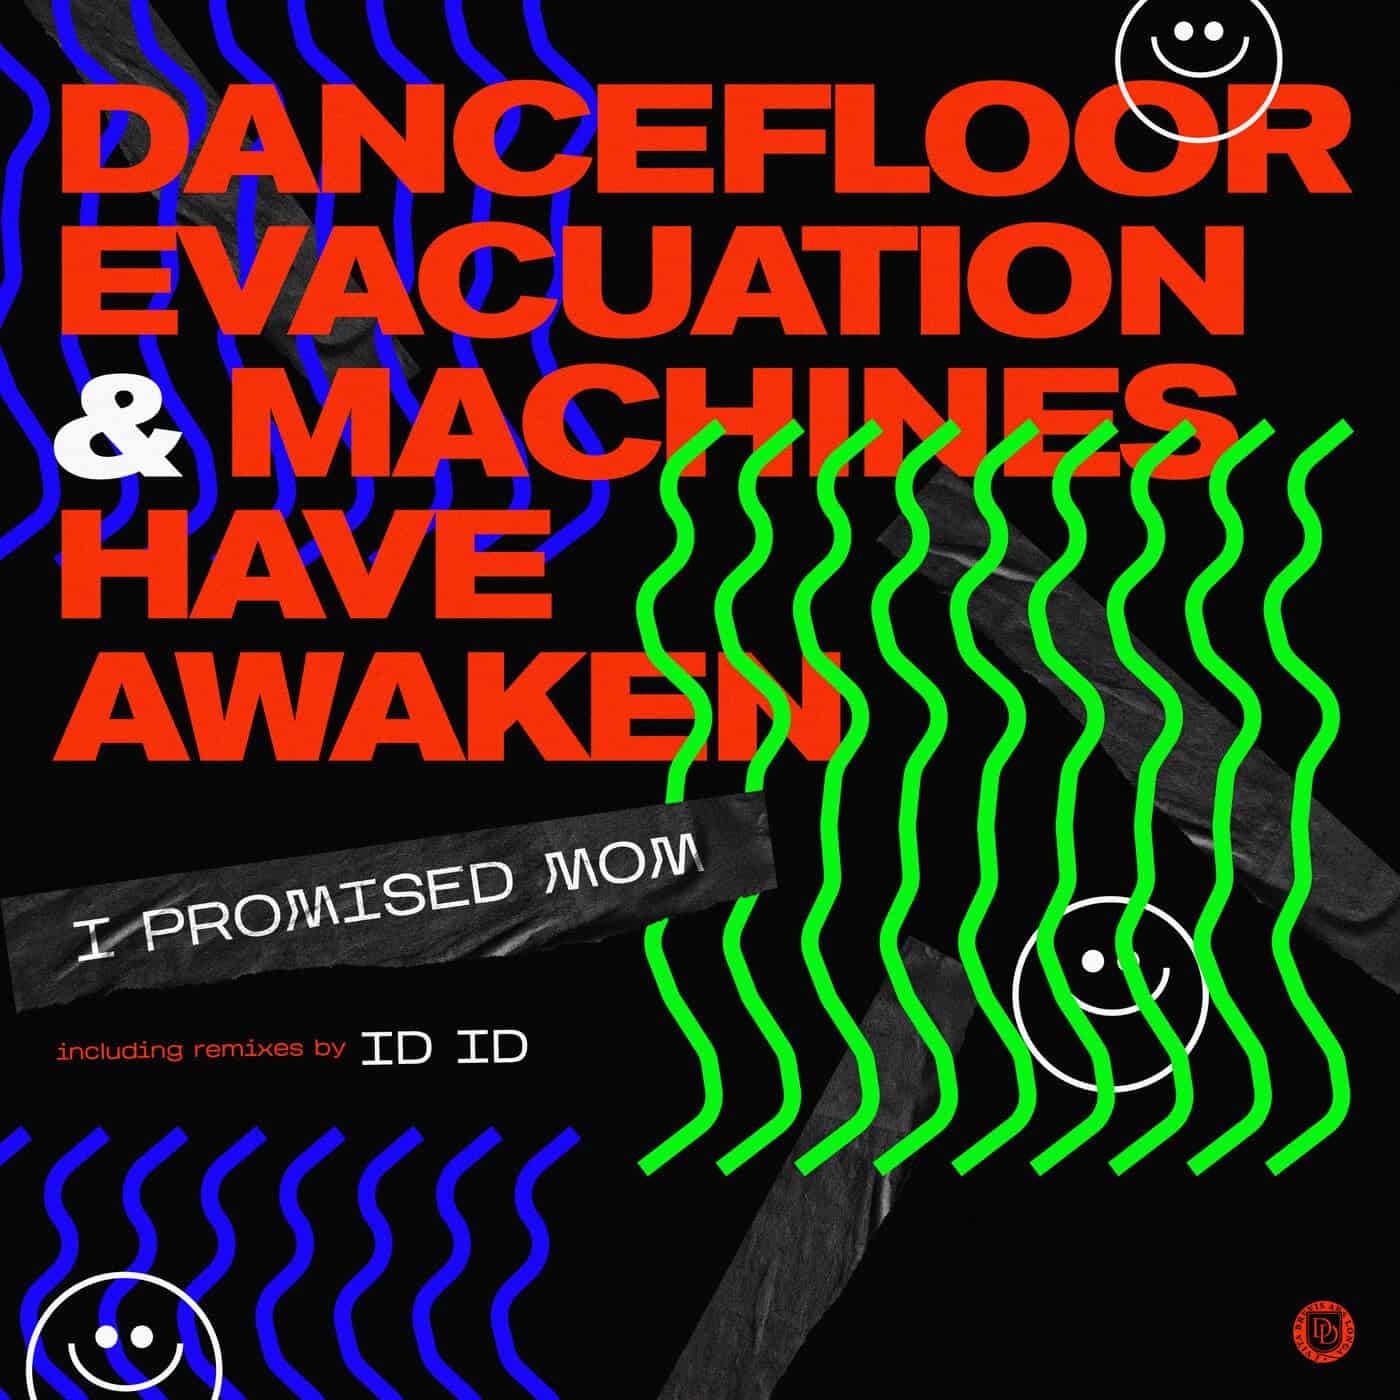 Download I Promised Mom - Dancefloor Evacuation & Machines Have Awaken on Electrobuzz